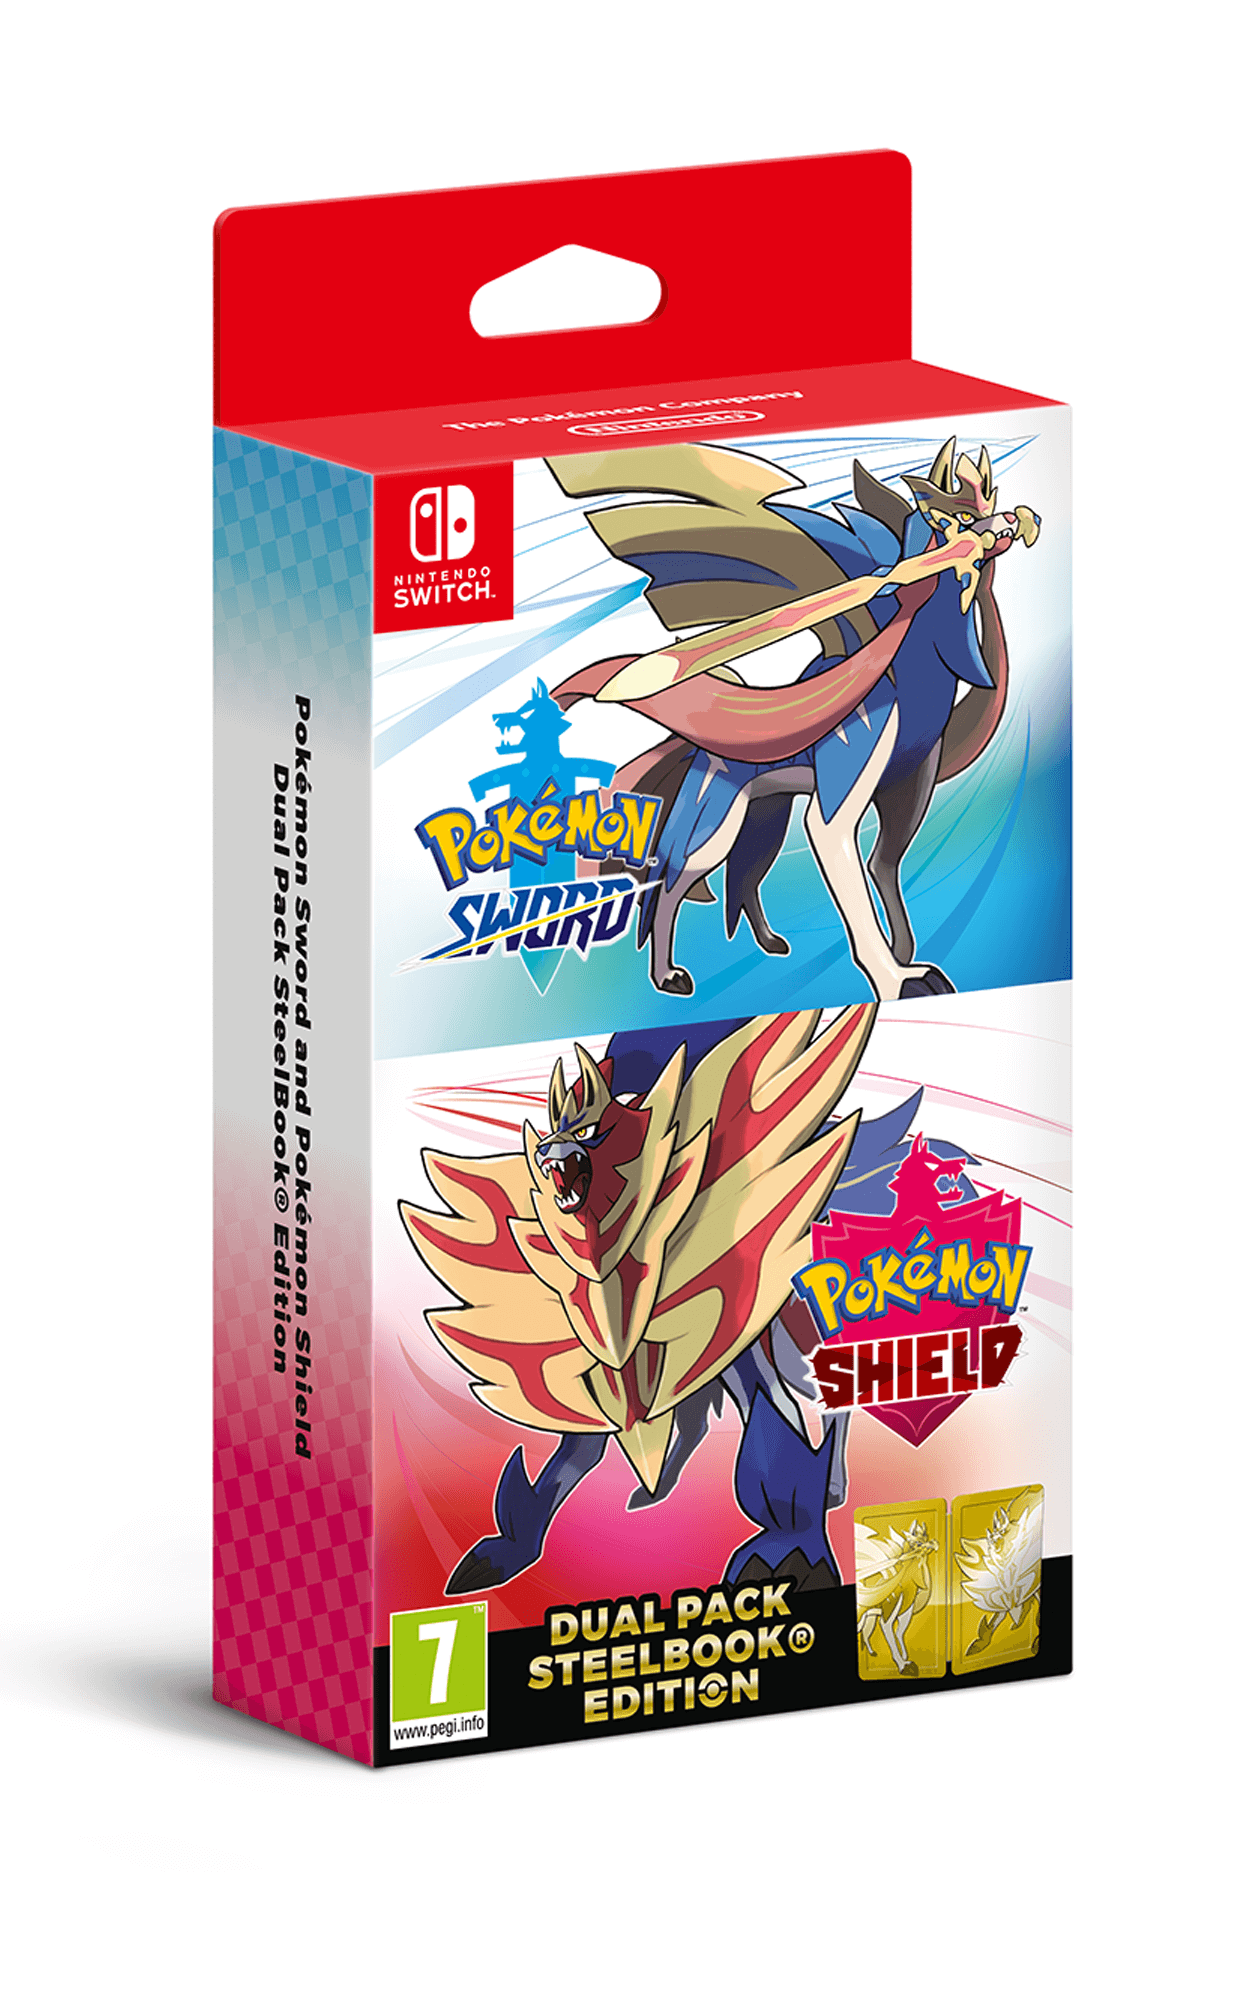 Pokémon Sword and Pokémon Shield Dual pack